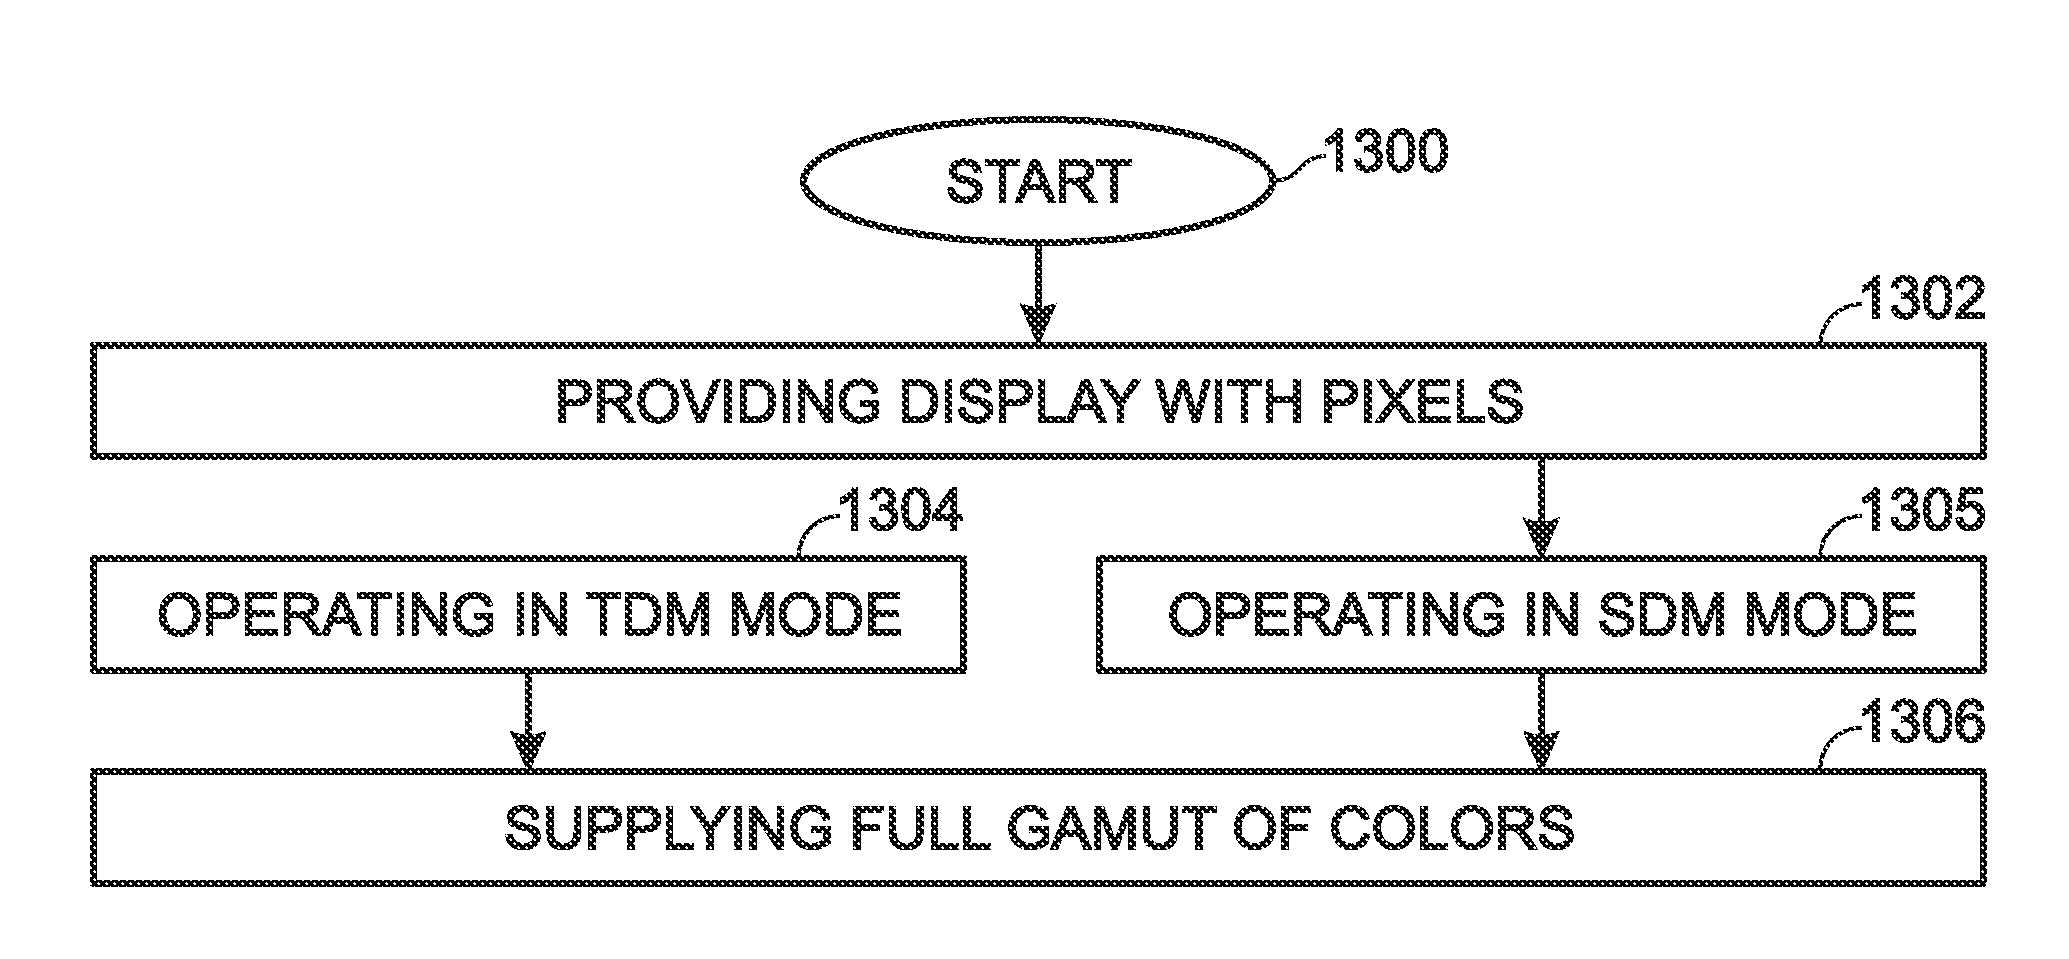 Full Color Gamut Display Using Multicolor Pixel Elements